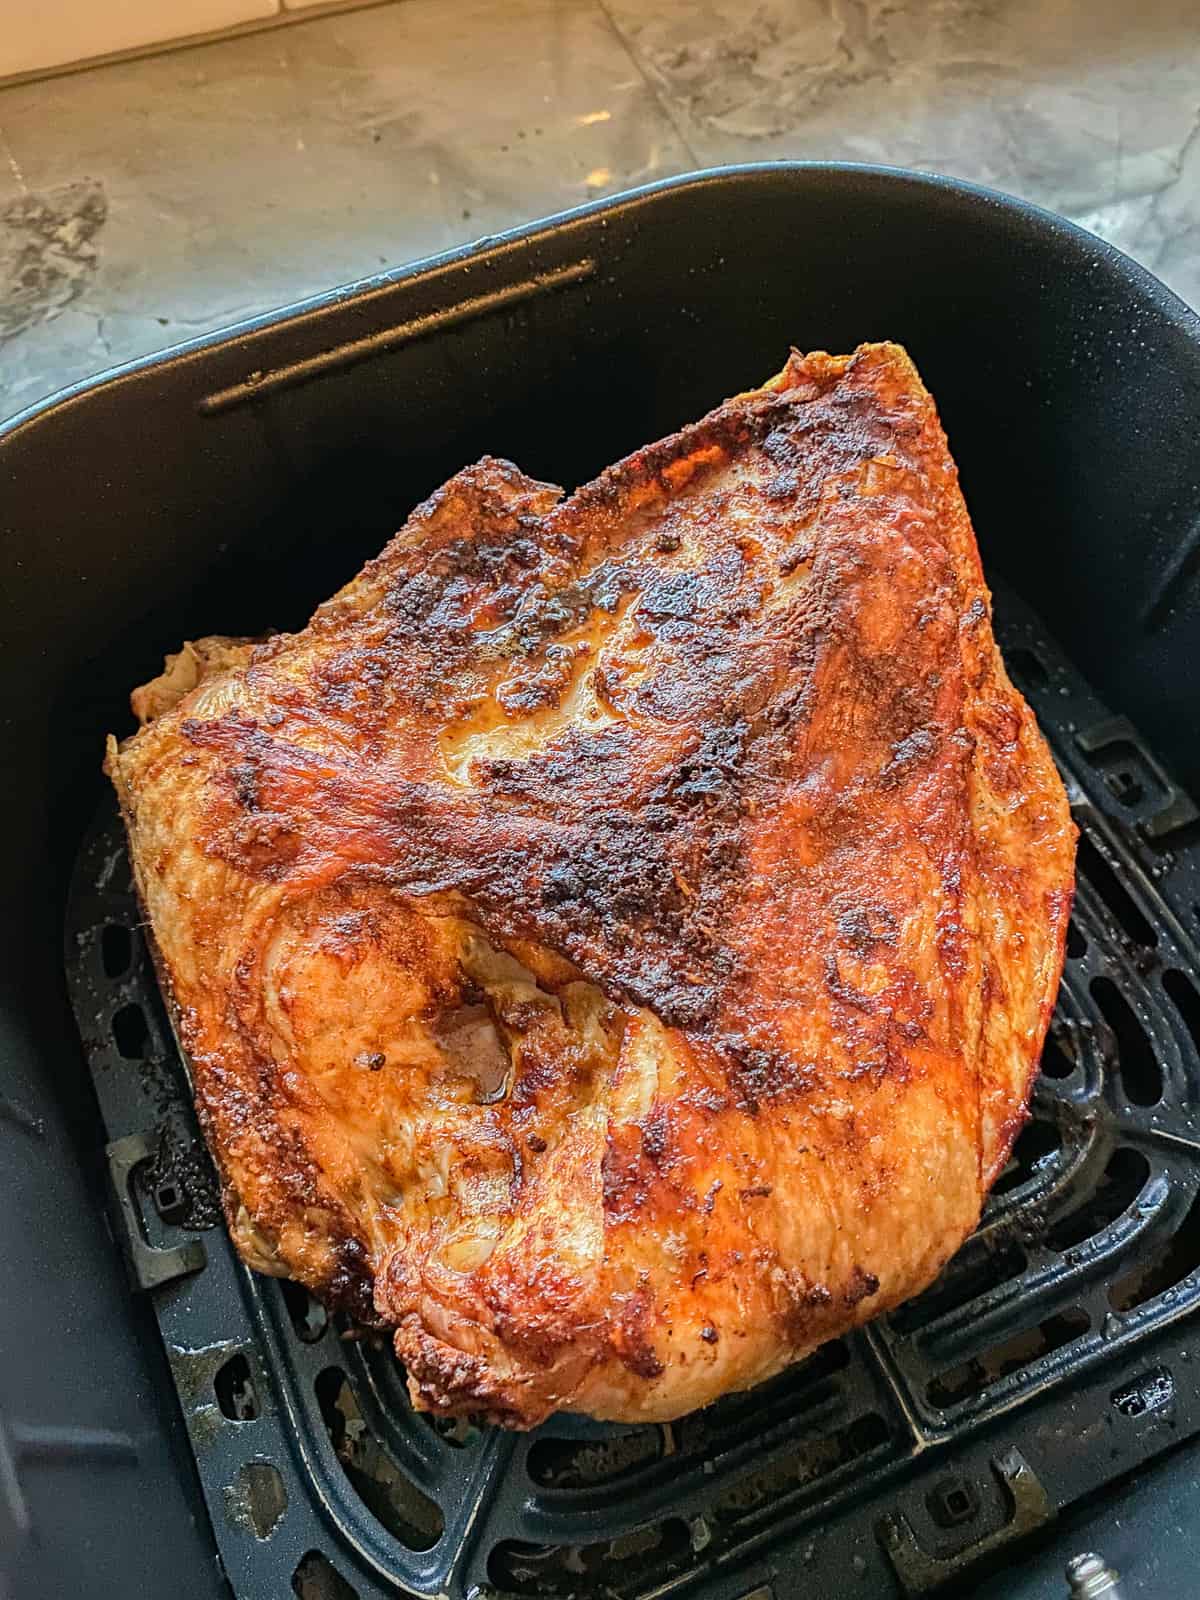 Cooked half turkey breast in an Air Fryer basket.